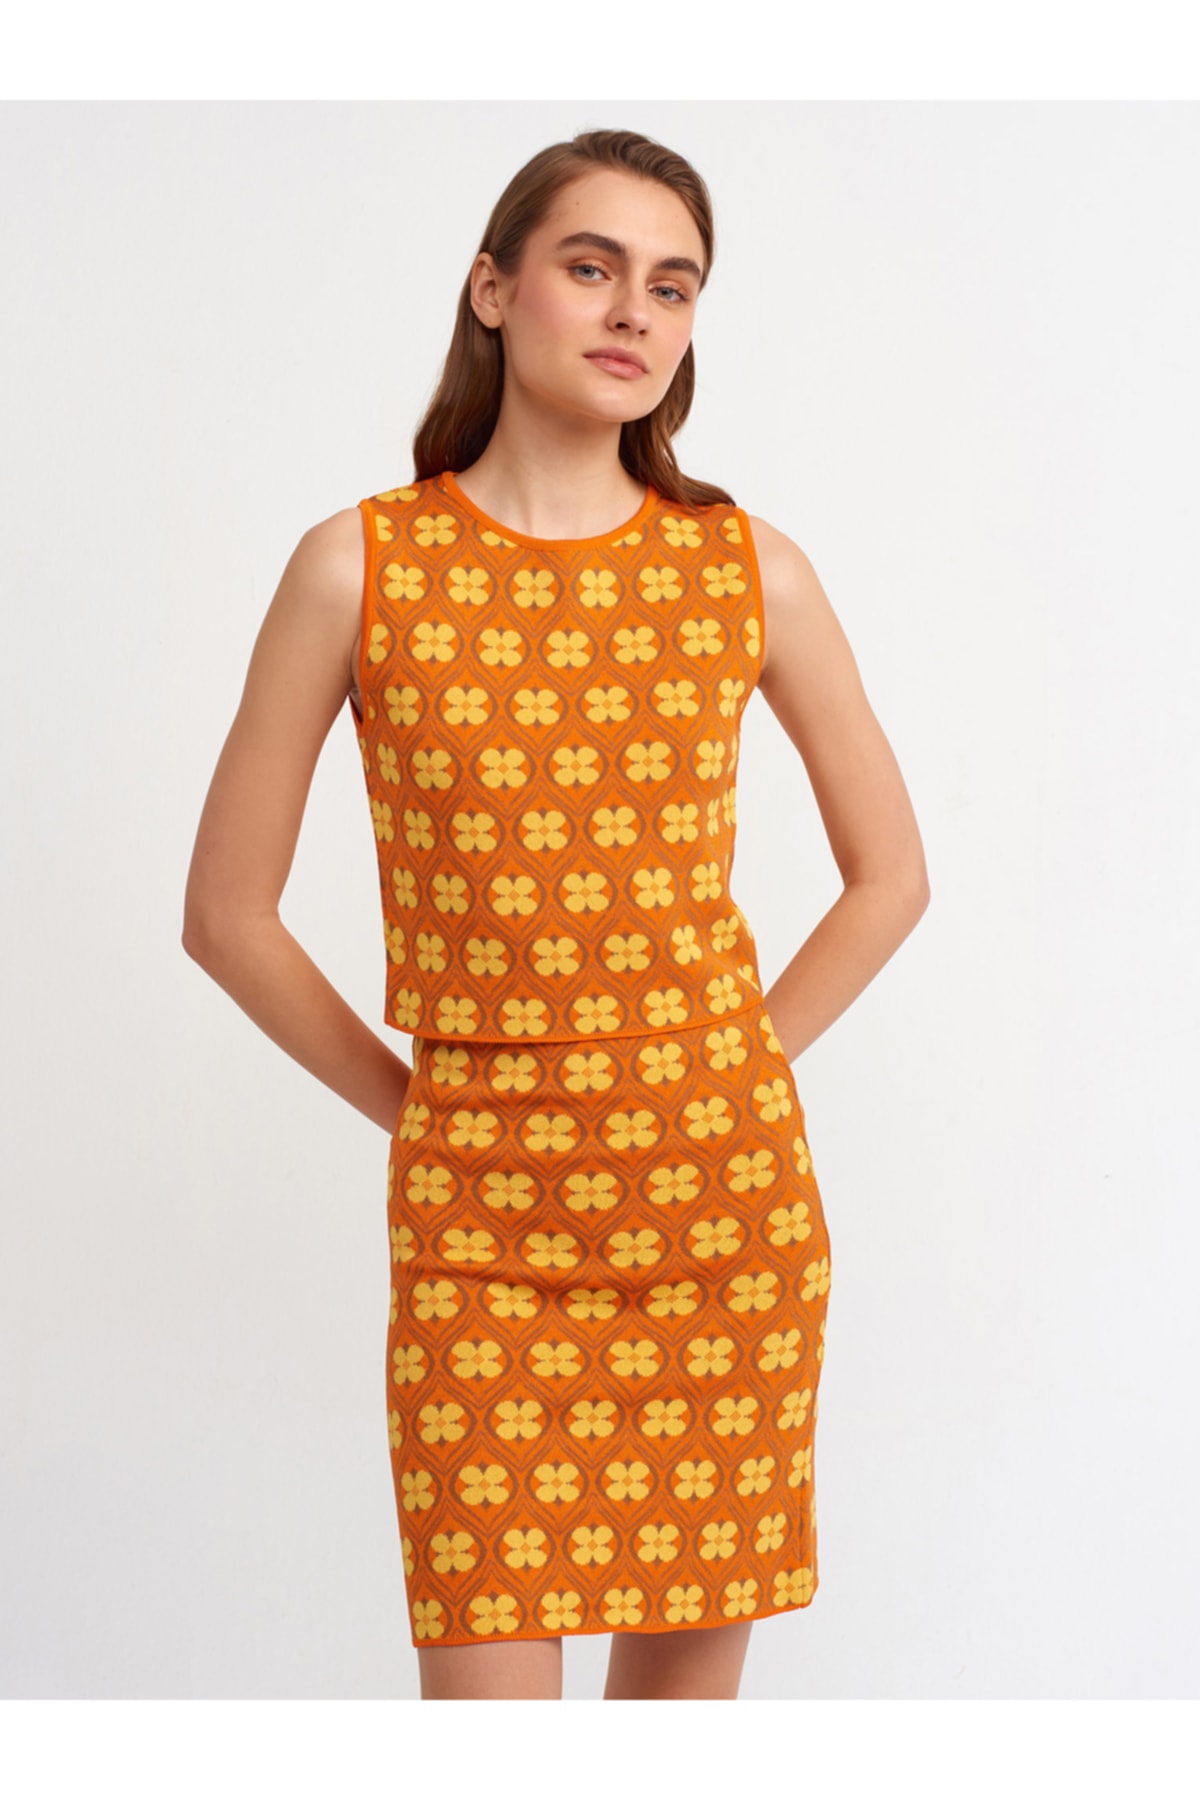 Dilvin 80102 Patterned Knitwear Skirt-orange